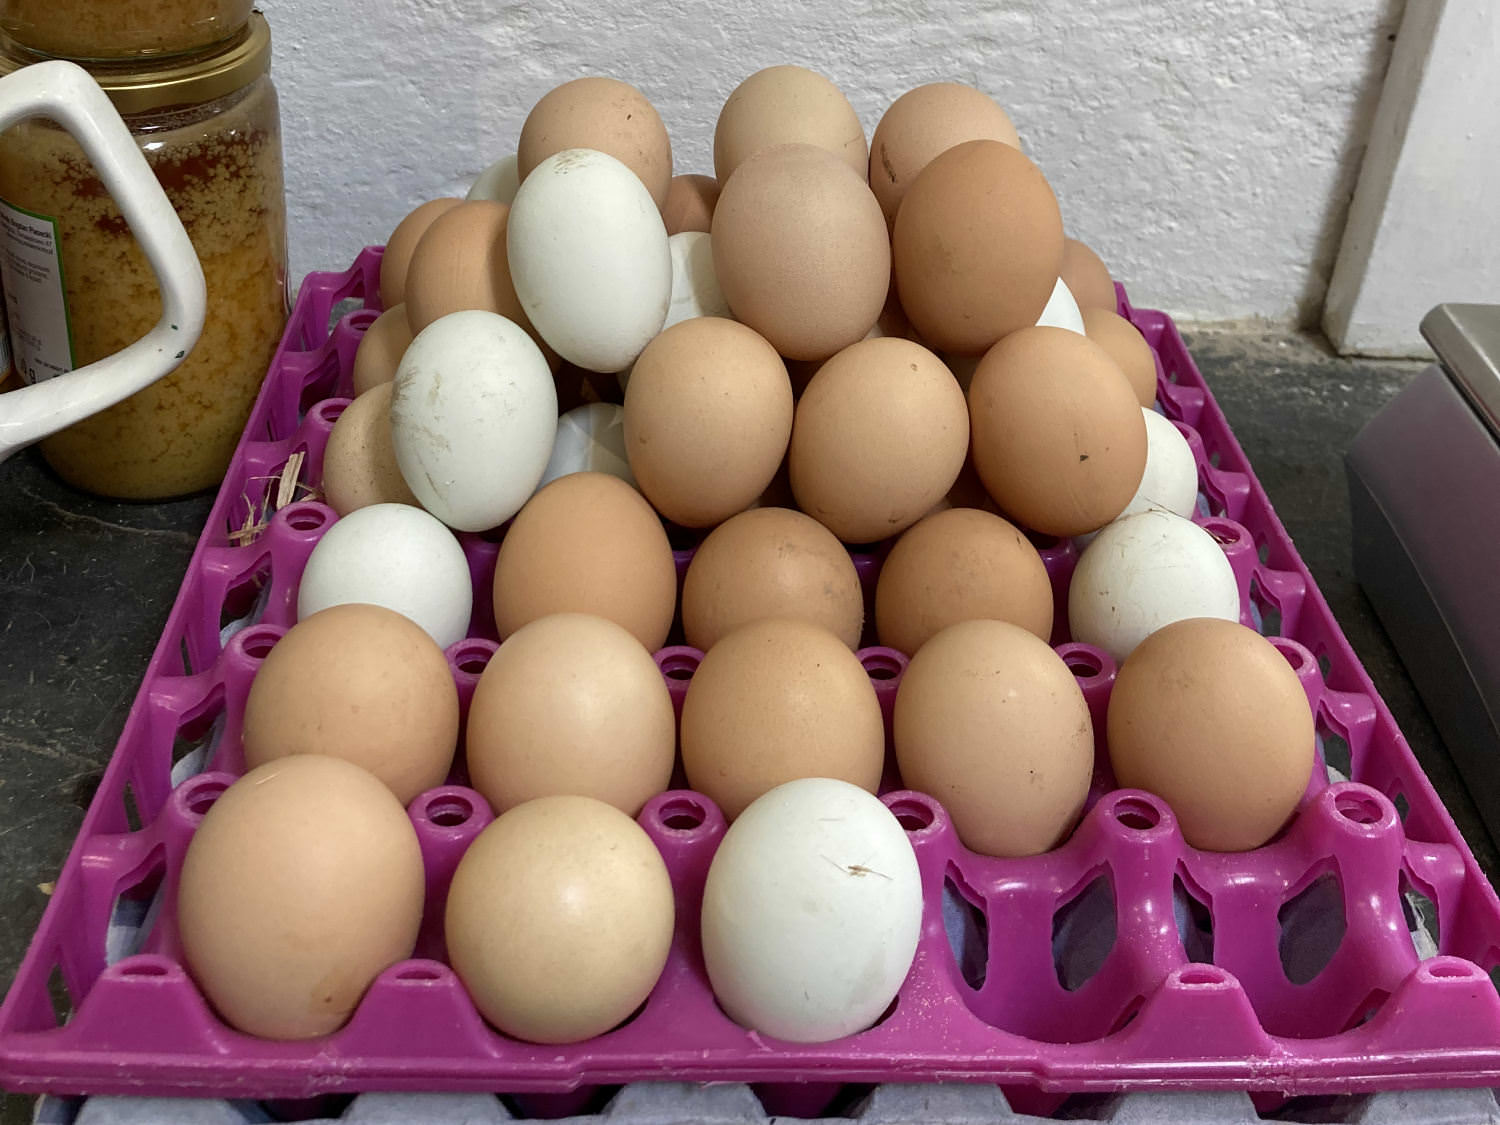 Image showing a large tray of fresh, free-range eggs.